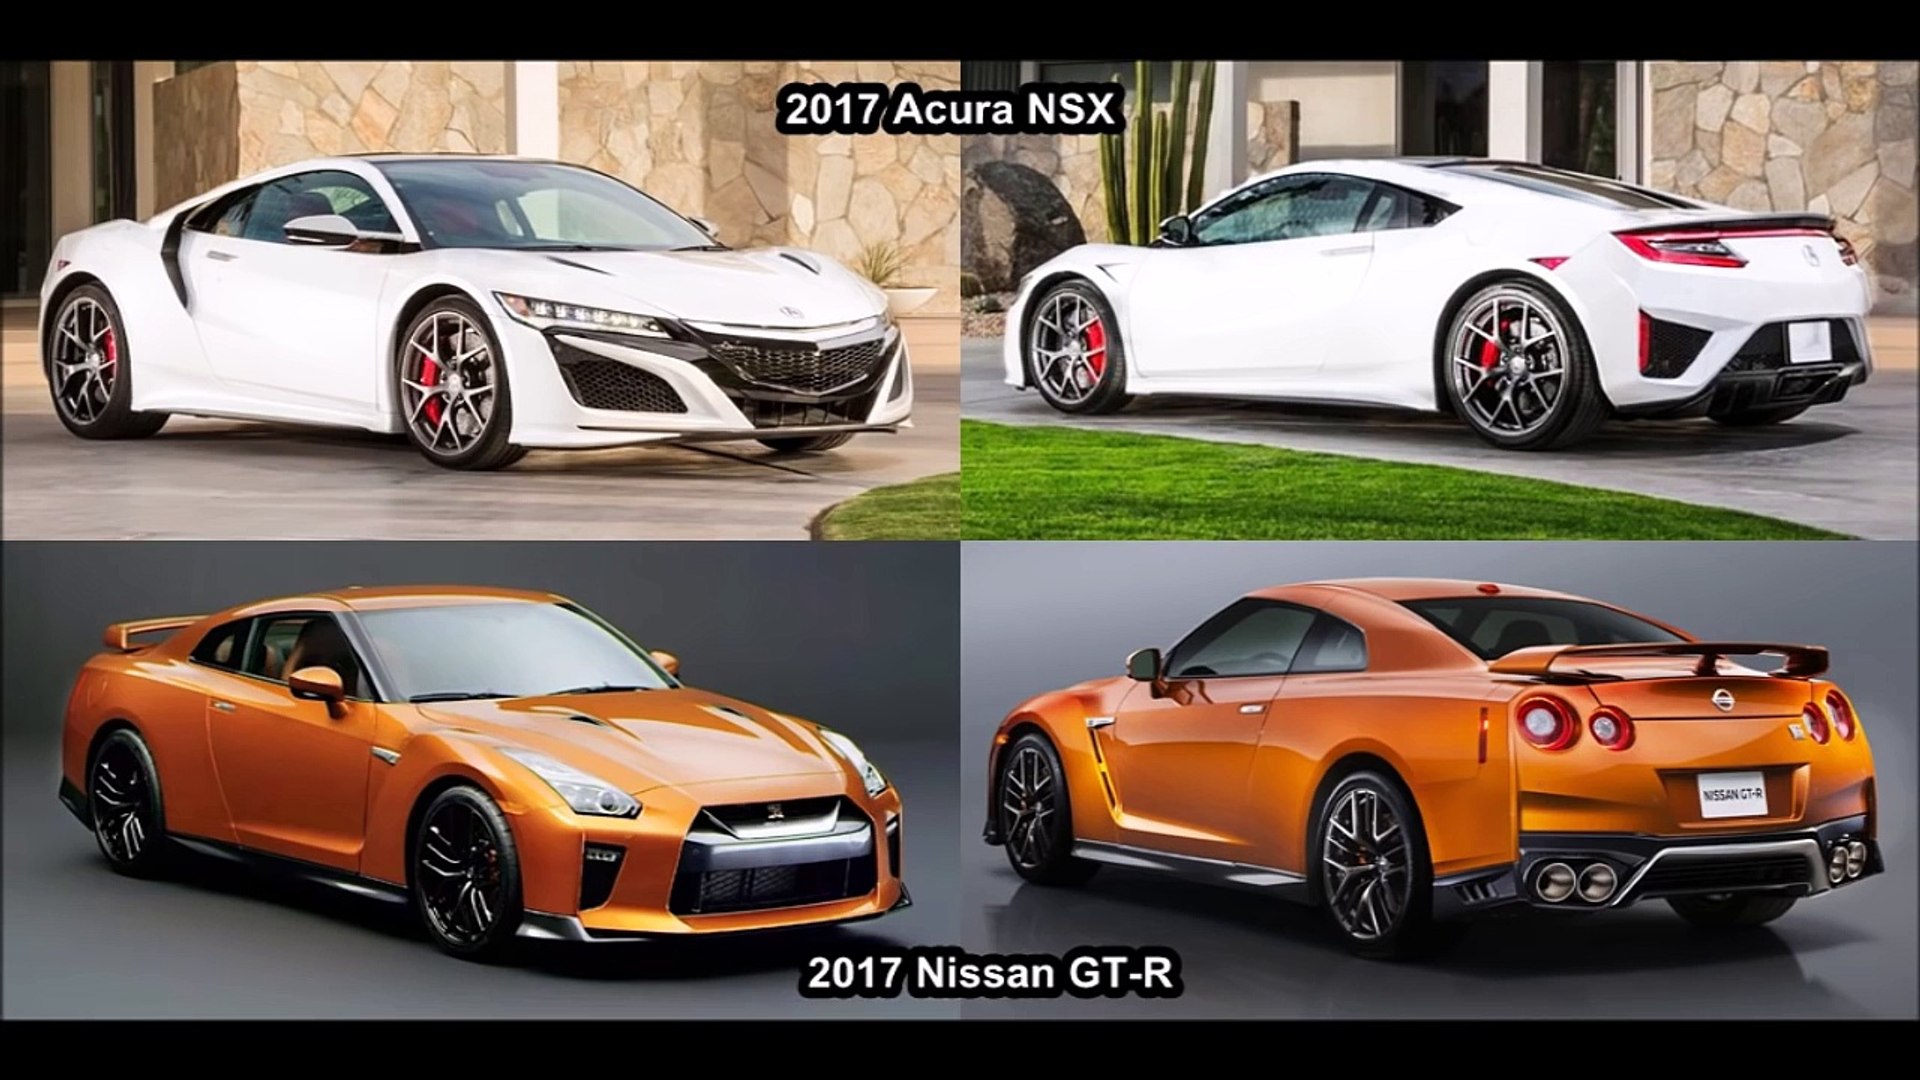 17 Acura Nsx Vs 17 Nissan Gt R Design Video Dailymotion